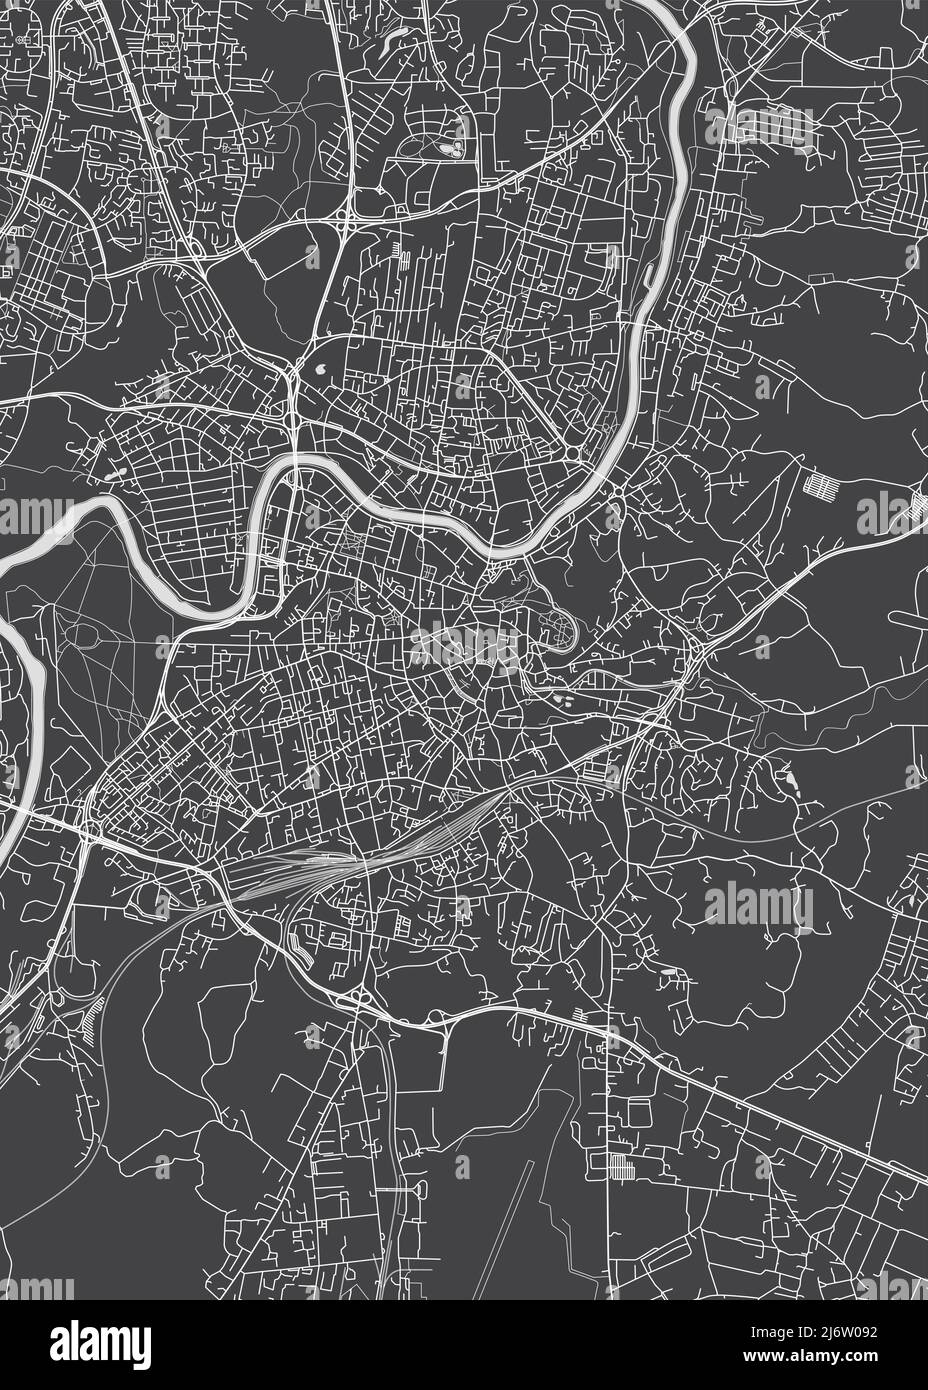 City map Vilnius, monochrome detailed plan, vector illustration Stock Vector